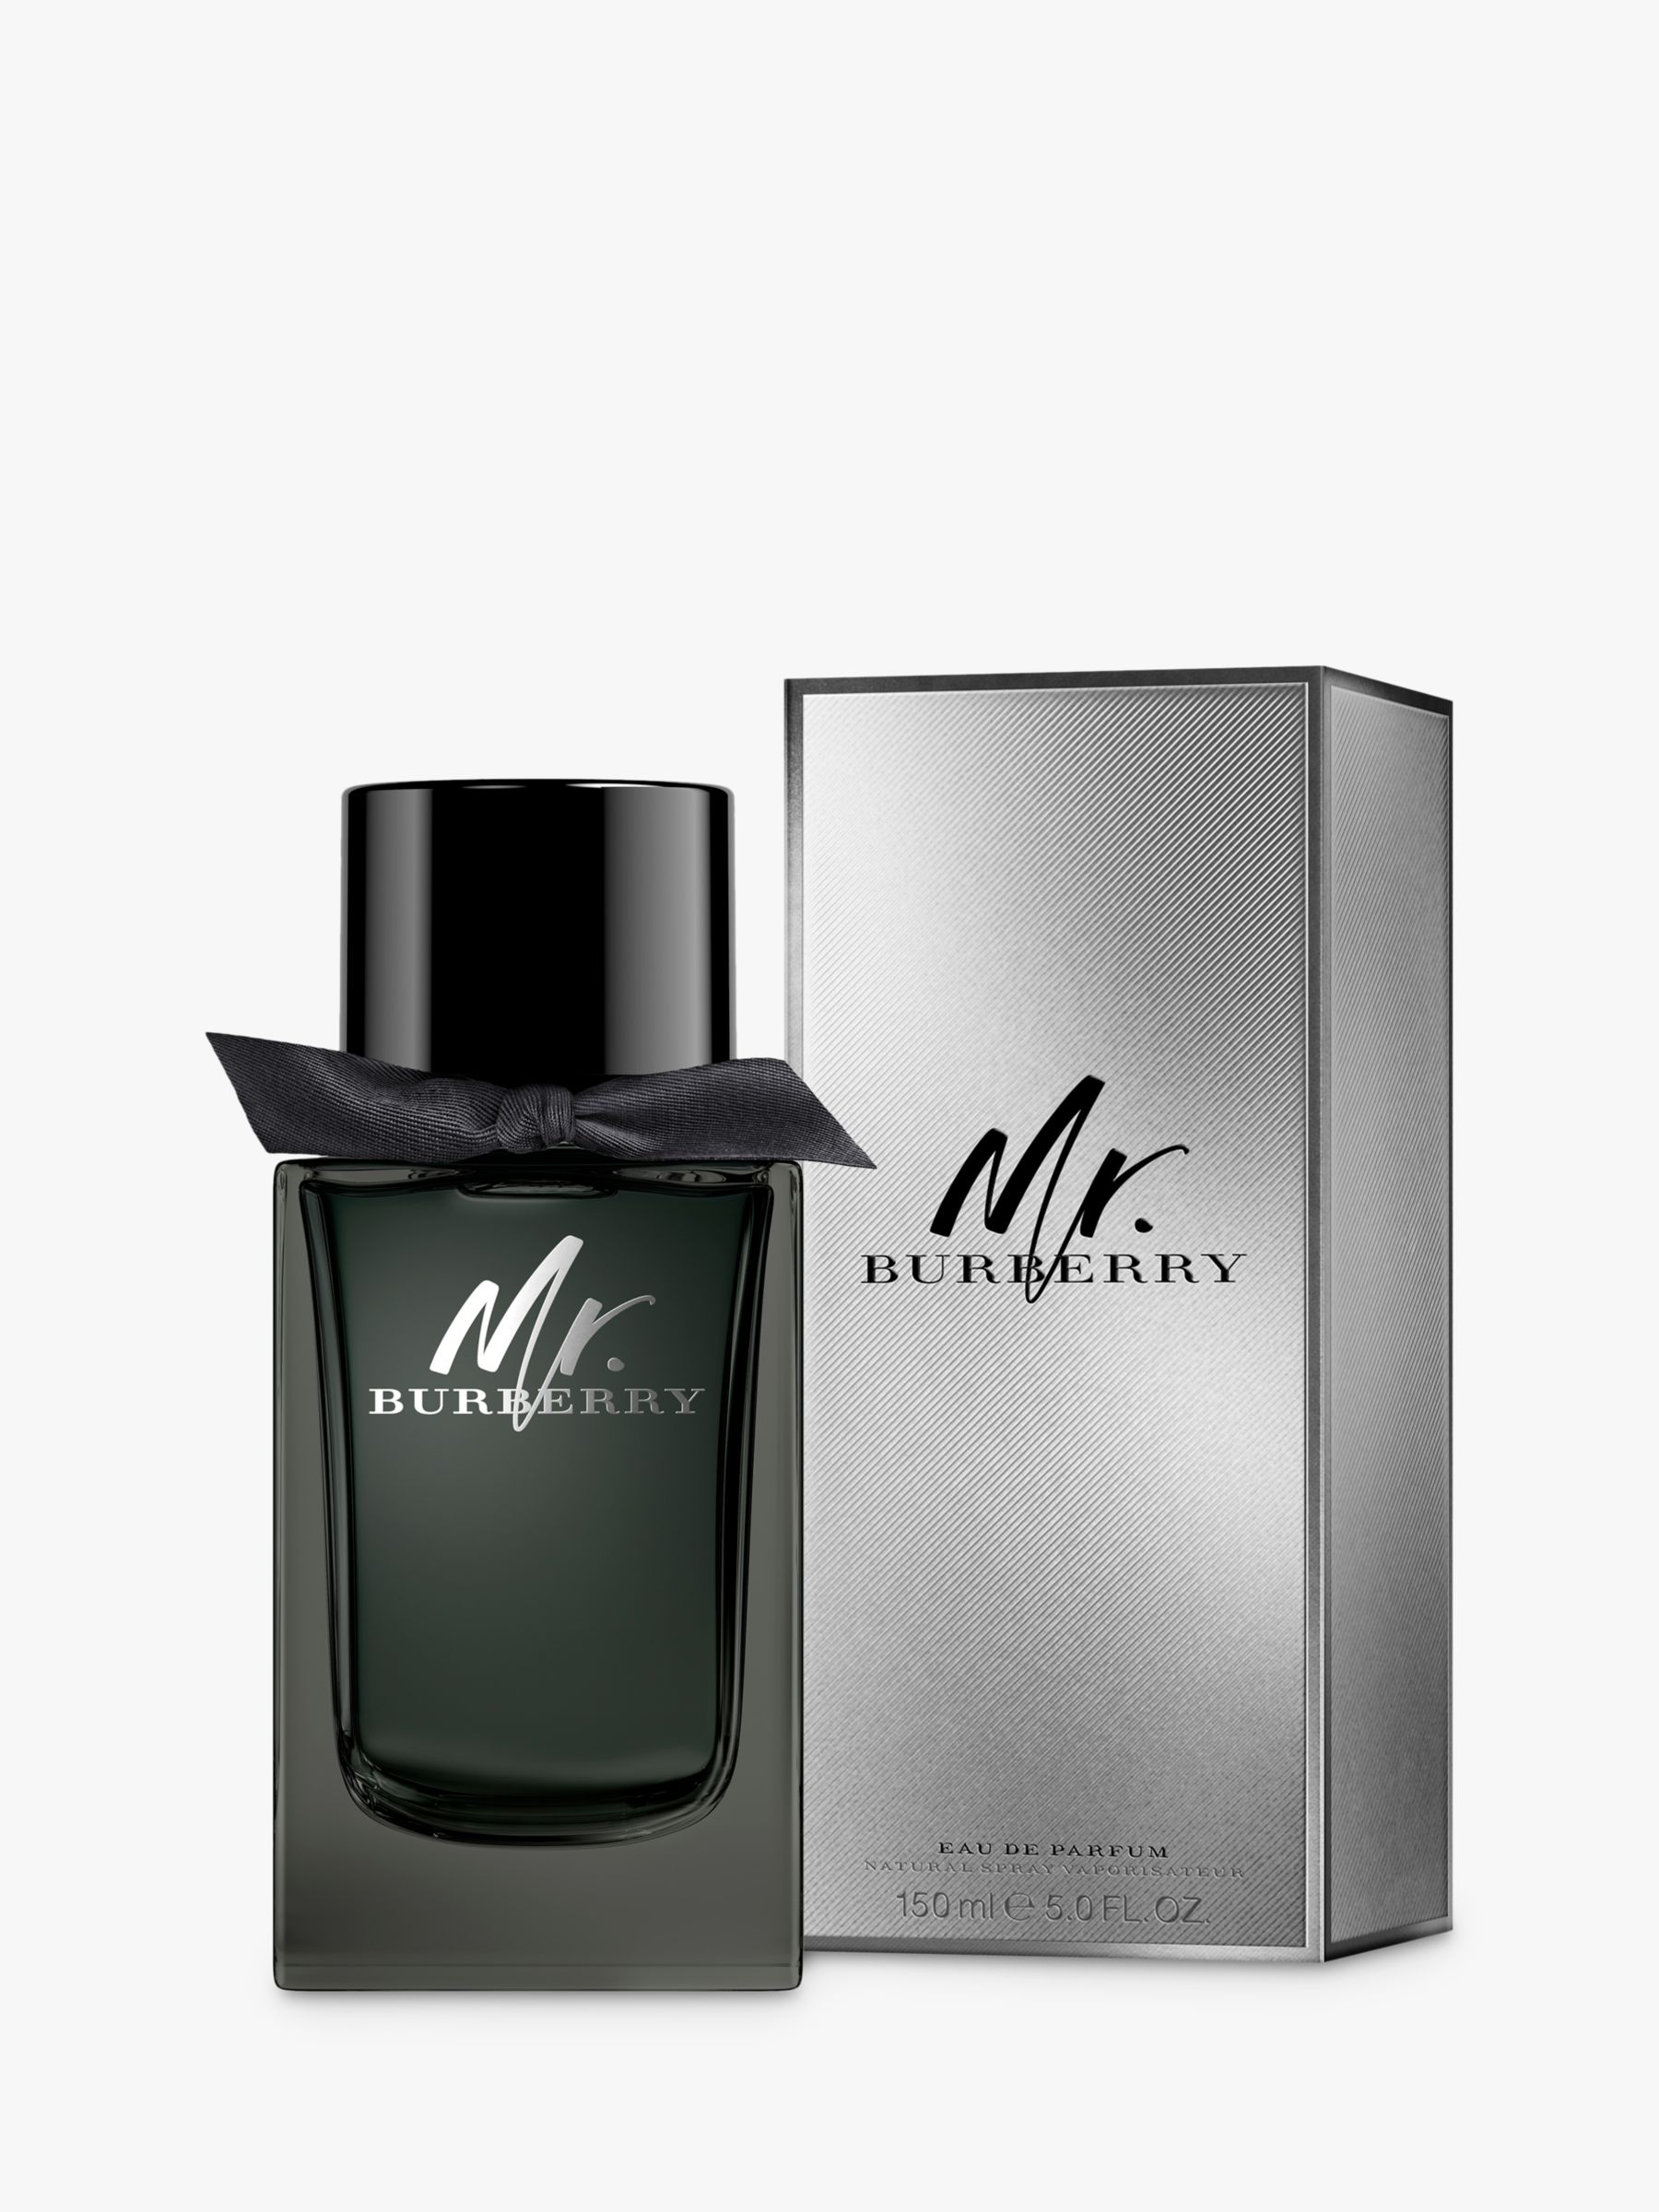 mister burberry parfum